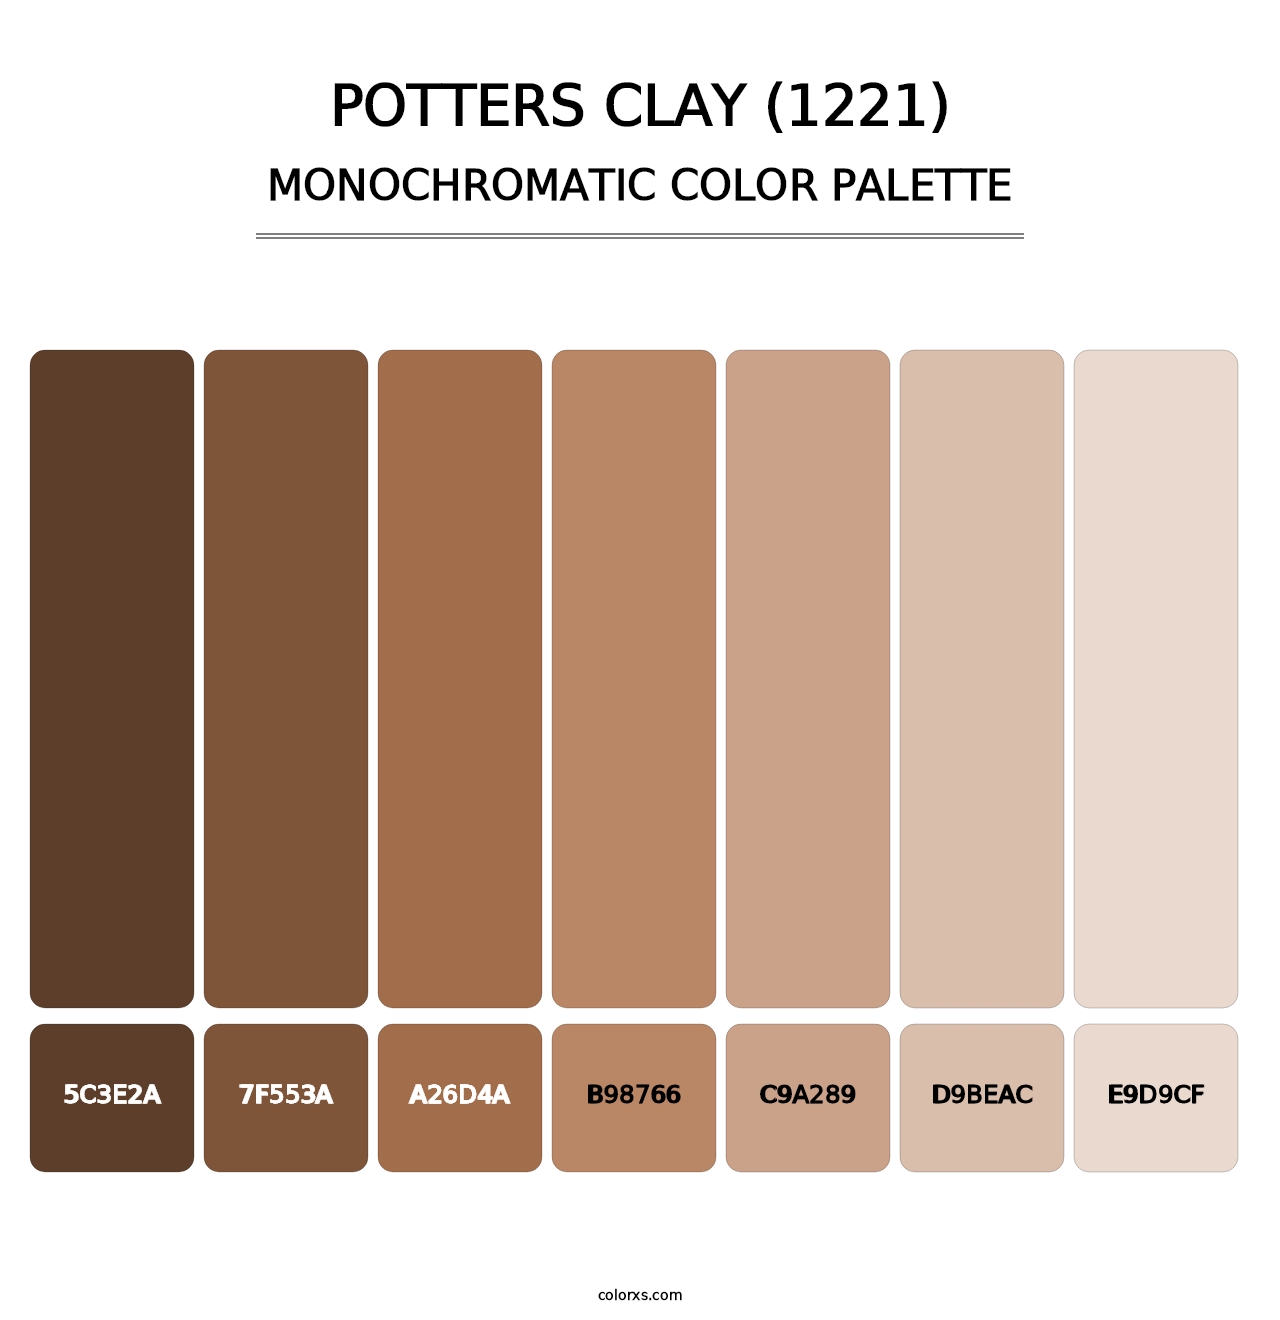 Potters Clay (1221) - Monochromatic Color Palette